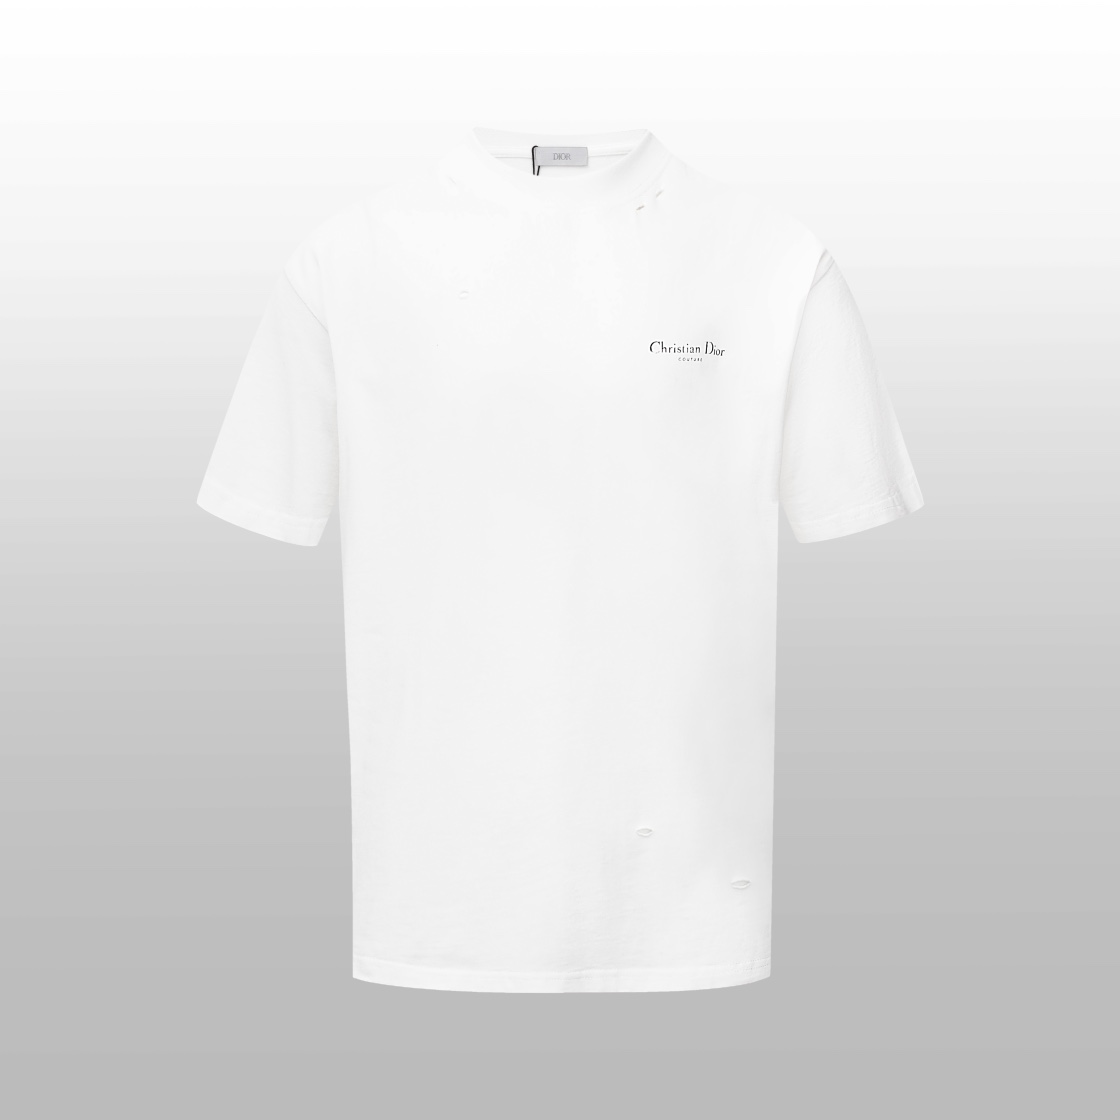 Top Quality
 Dior Best
 Clothing T-Shirt Black Grey White Printing Unisex Short Sleeve